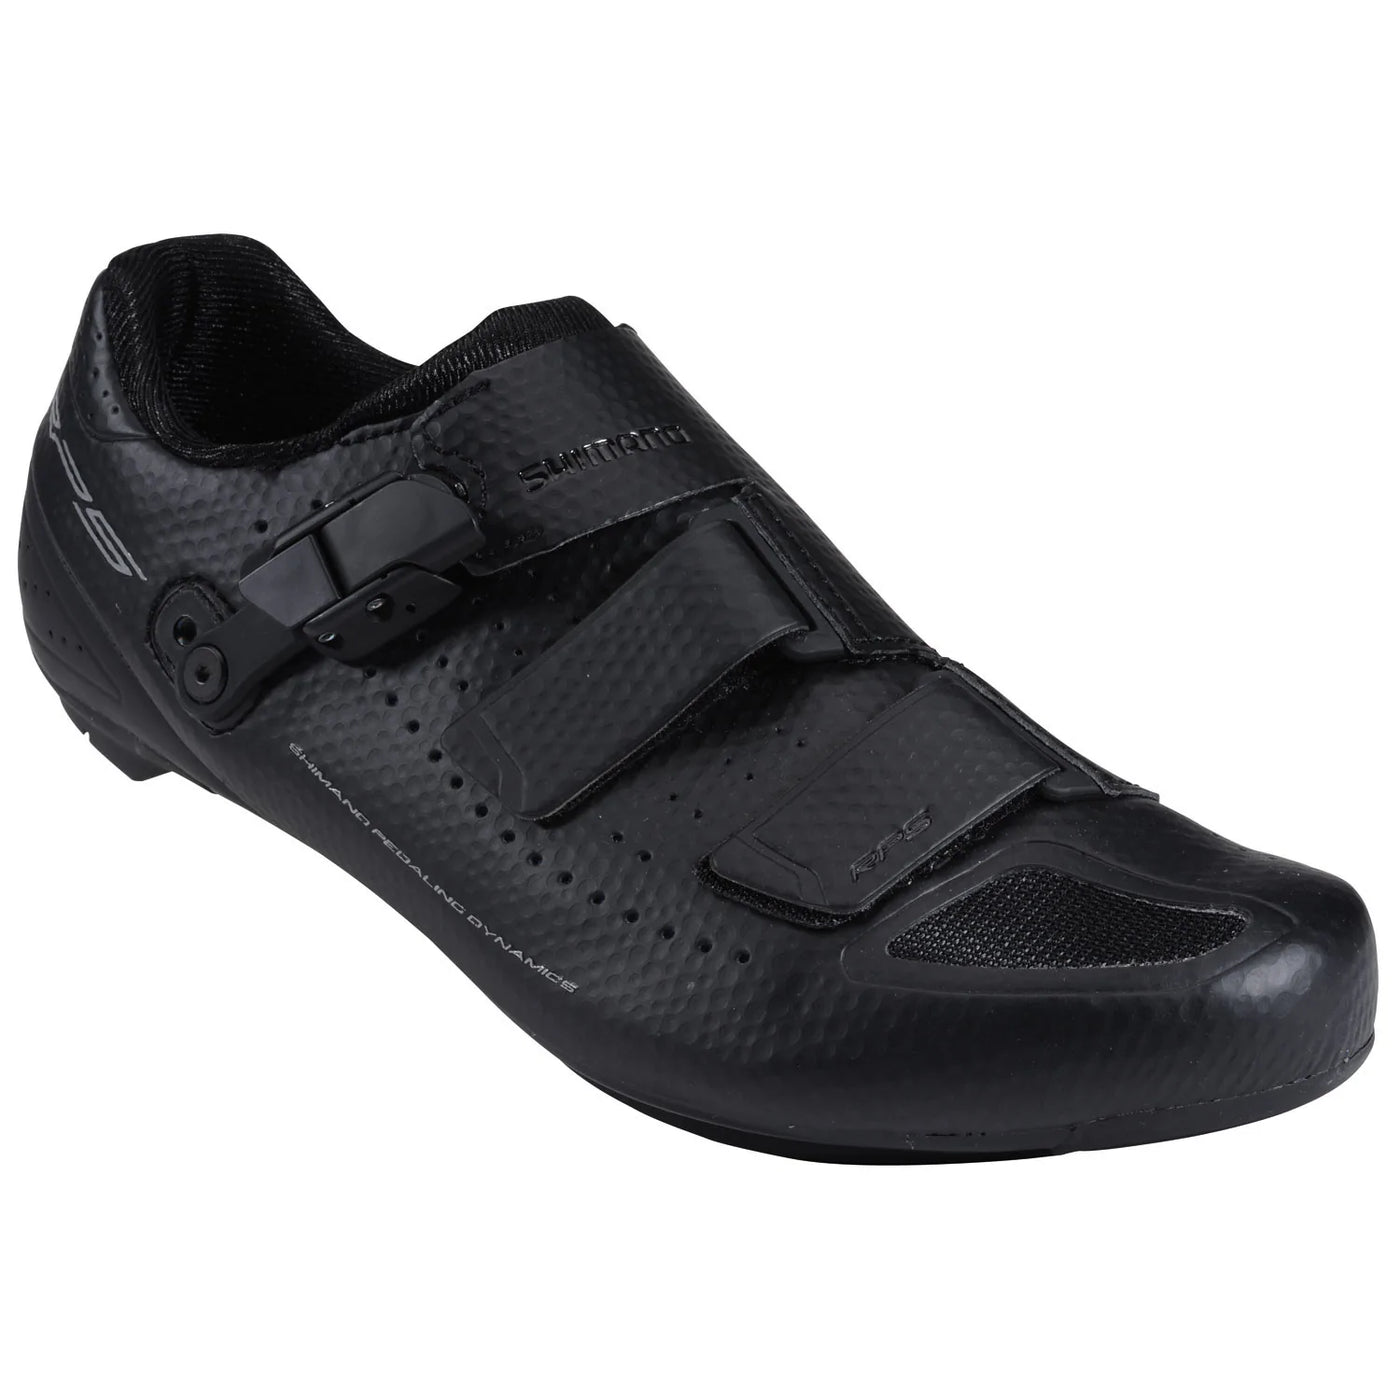 Shimano SH-RP5 Road Cycling Shoes Black RP5